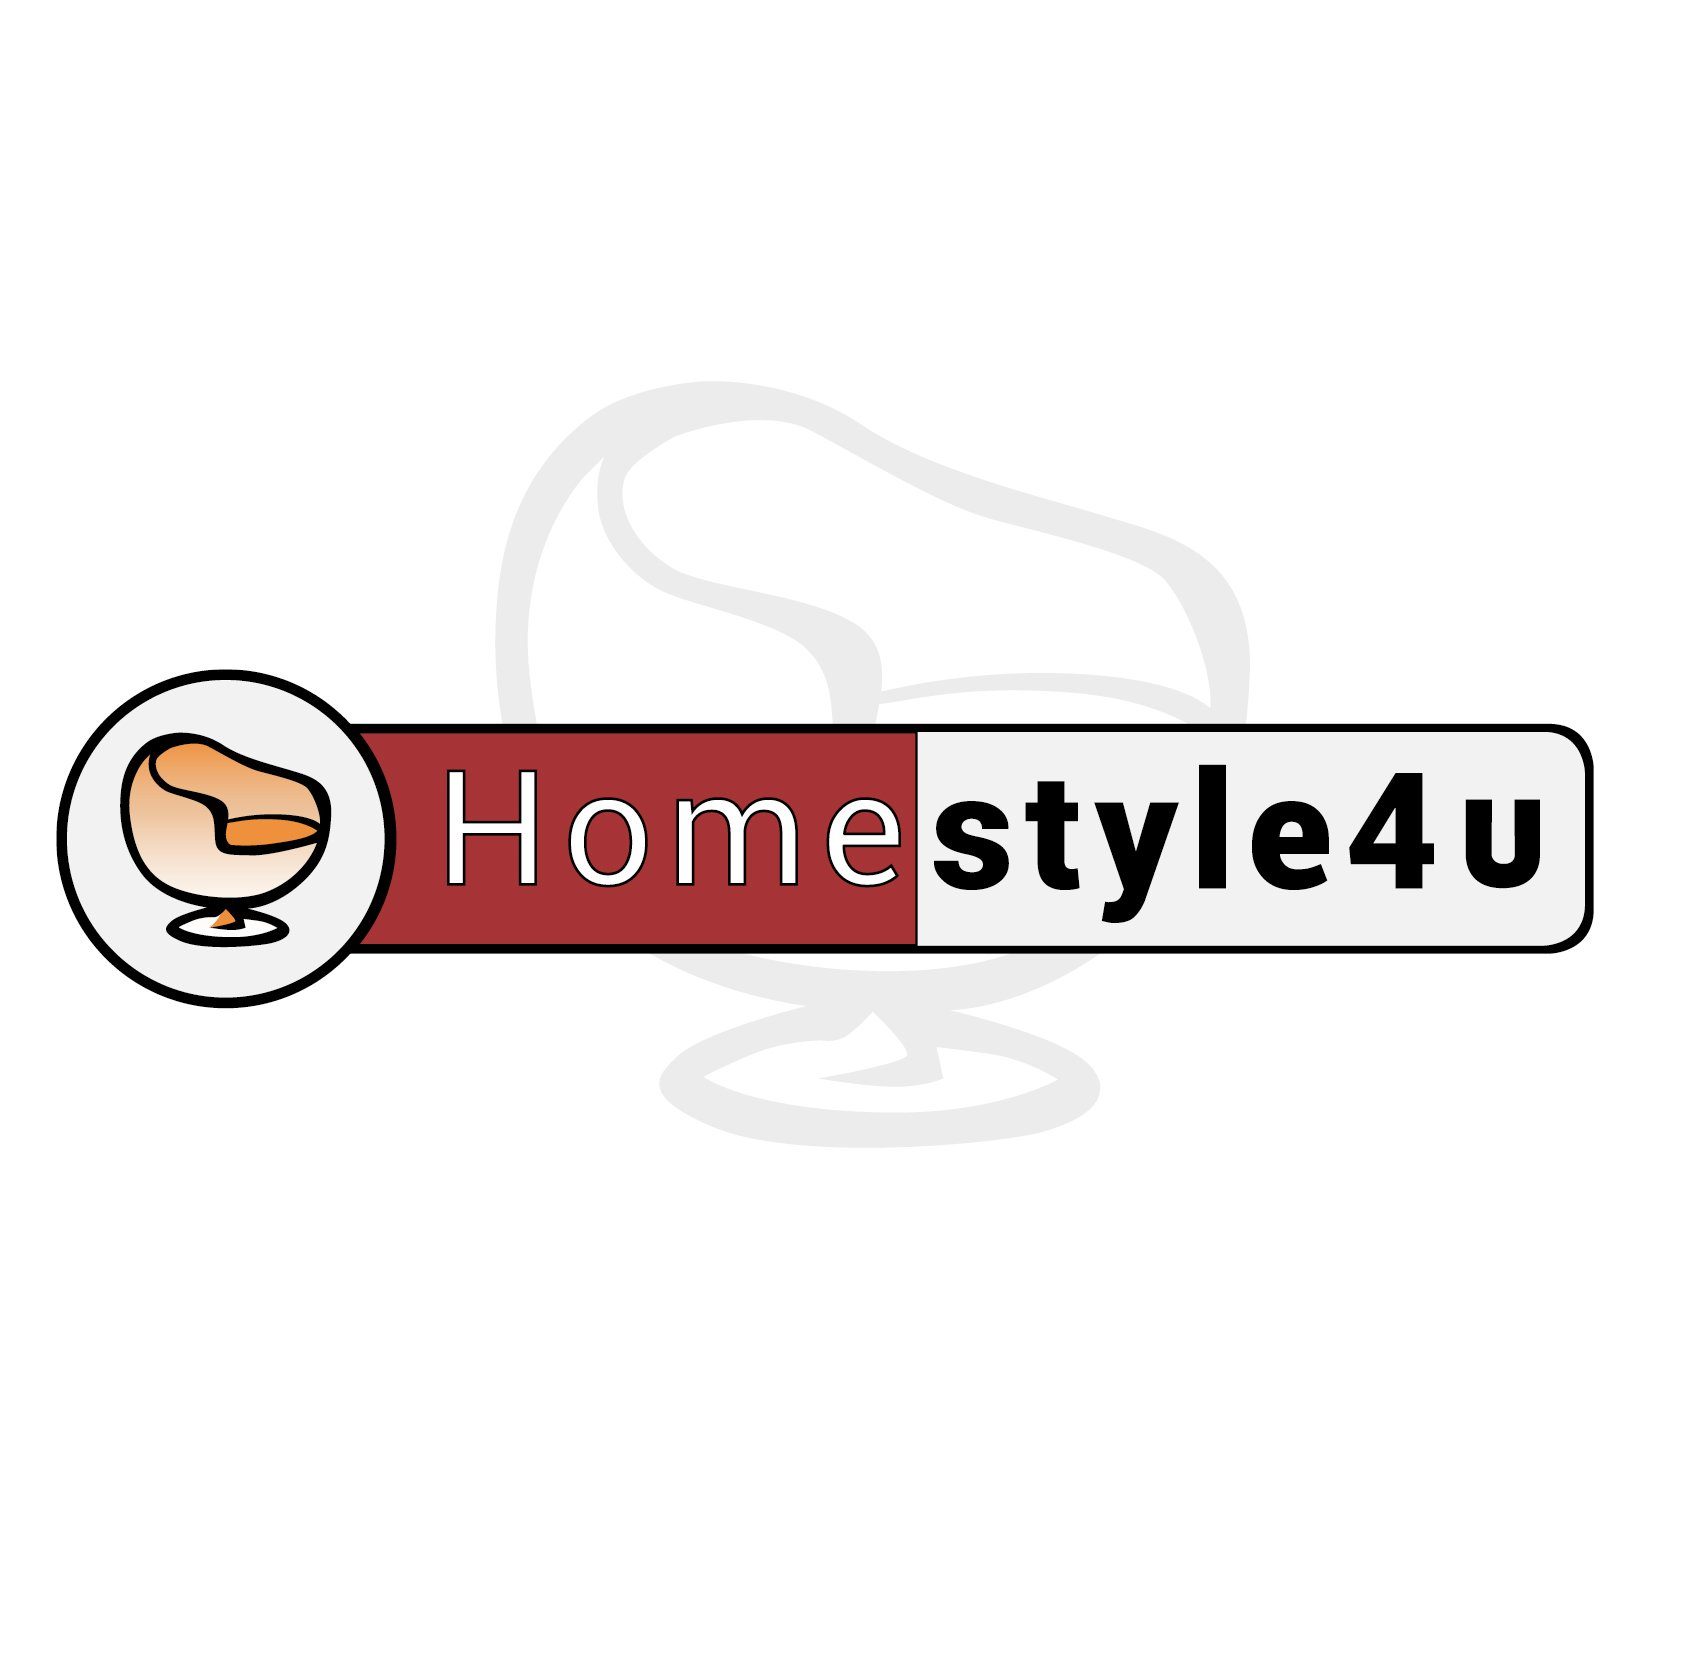 Homestyle4u